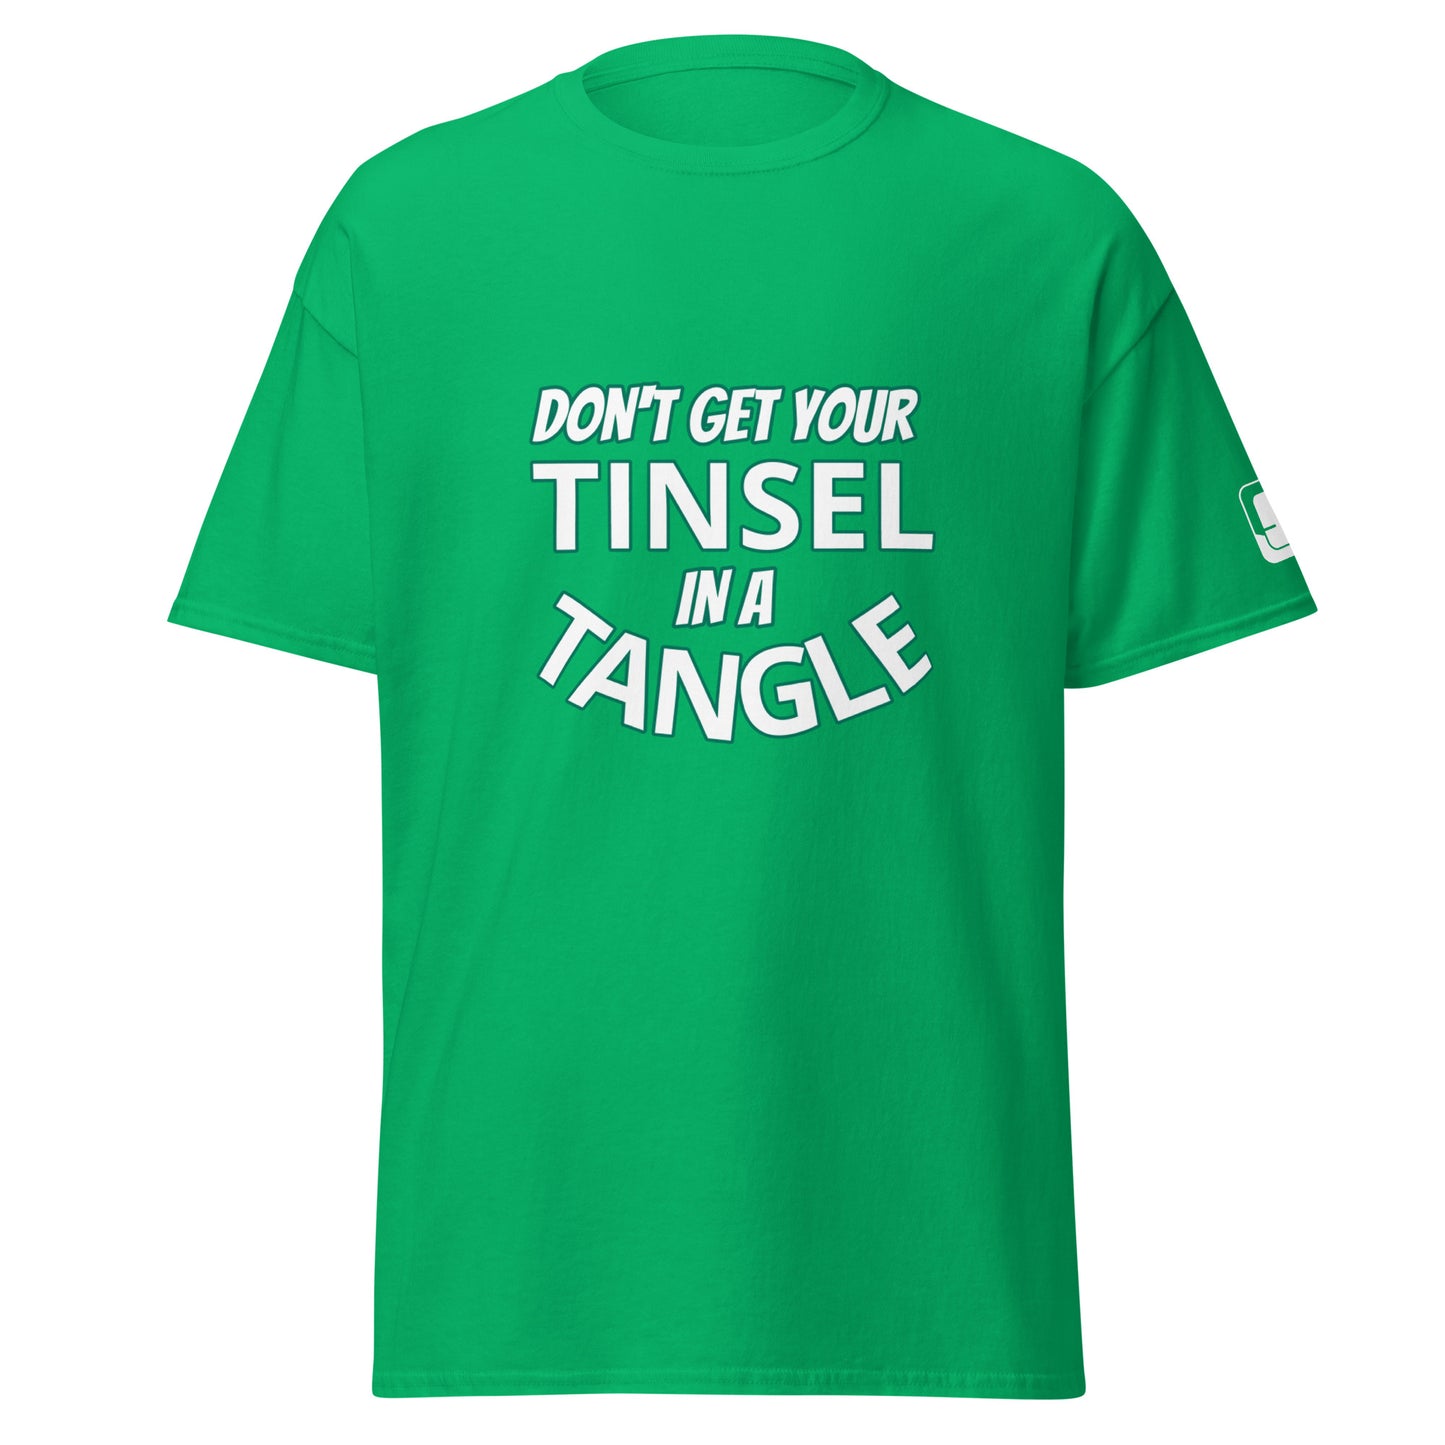 Tinsel Tangle